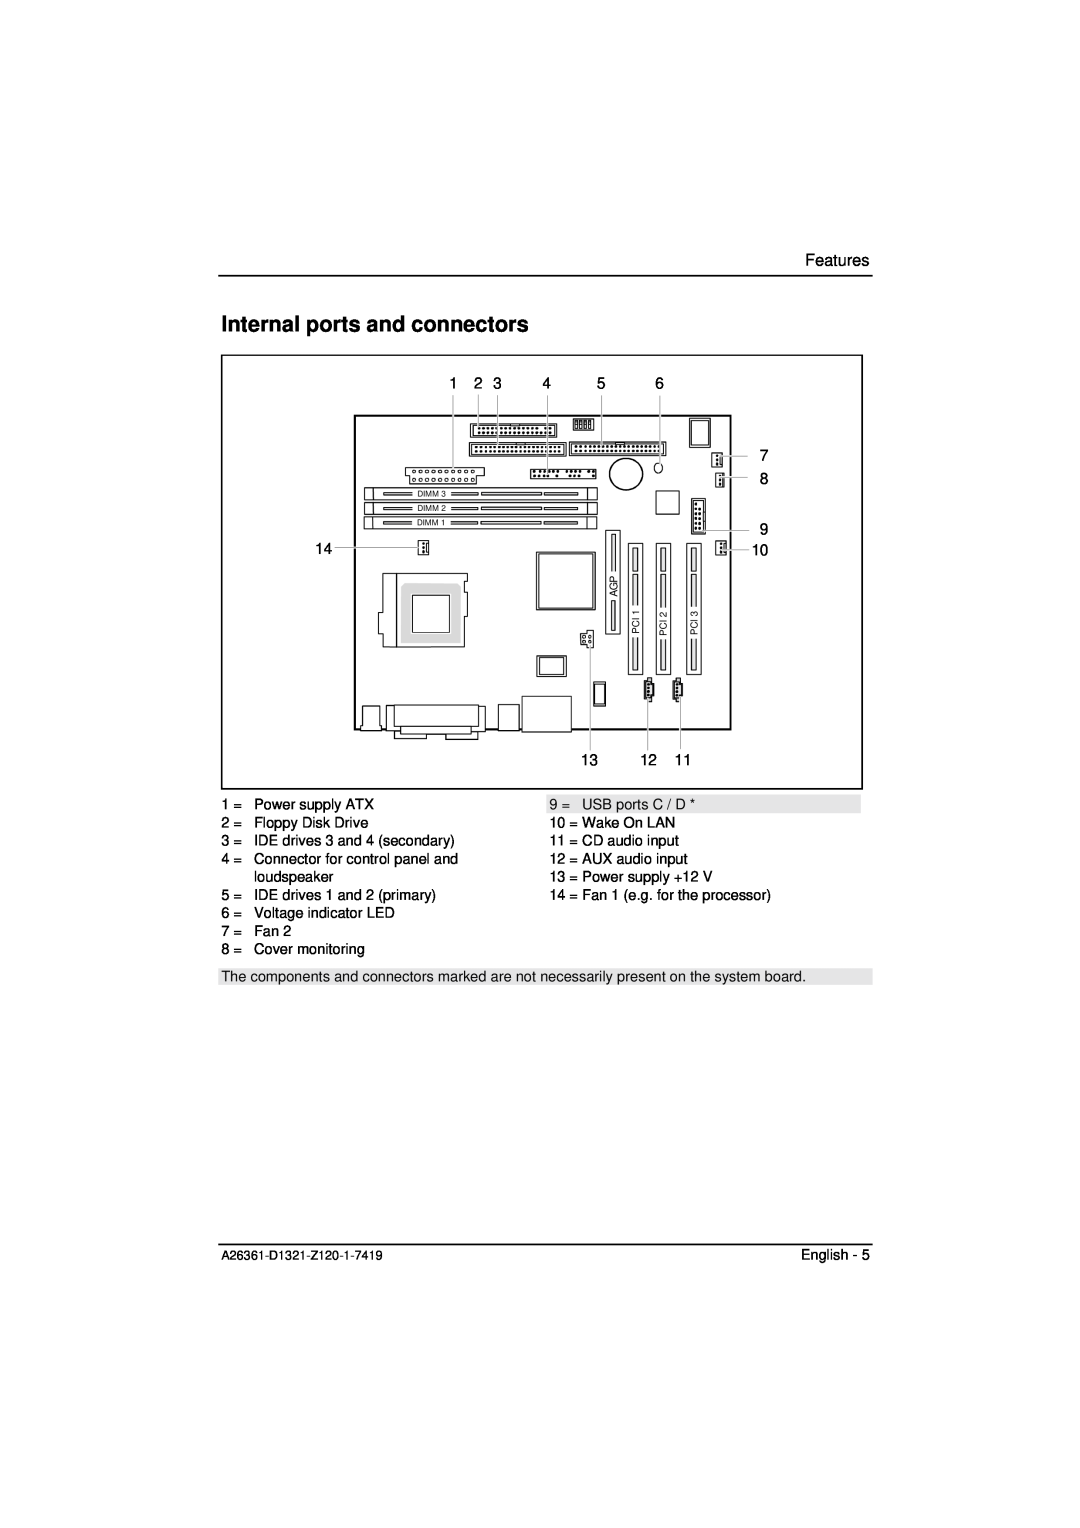 Fujitsu D1321 technical manual Internal ports and connectors, Features 